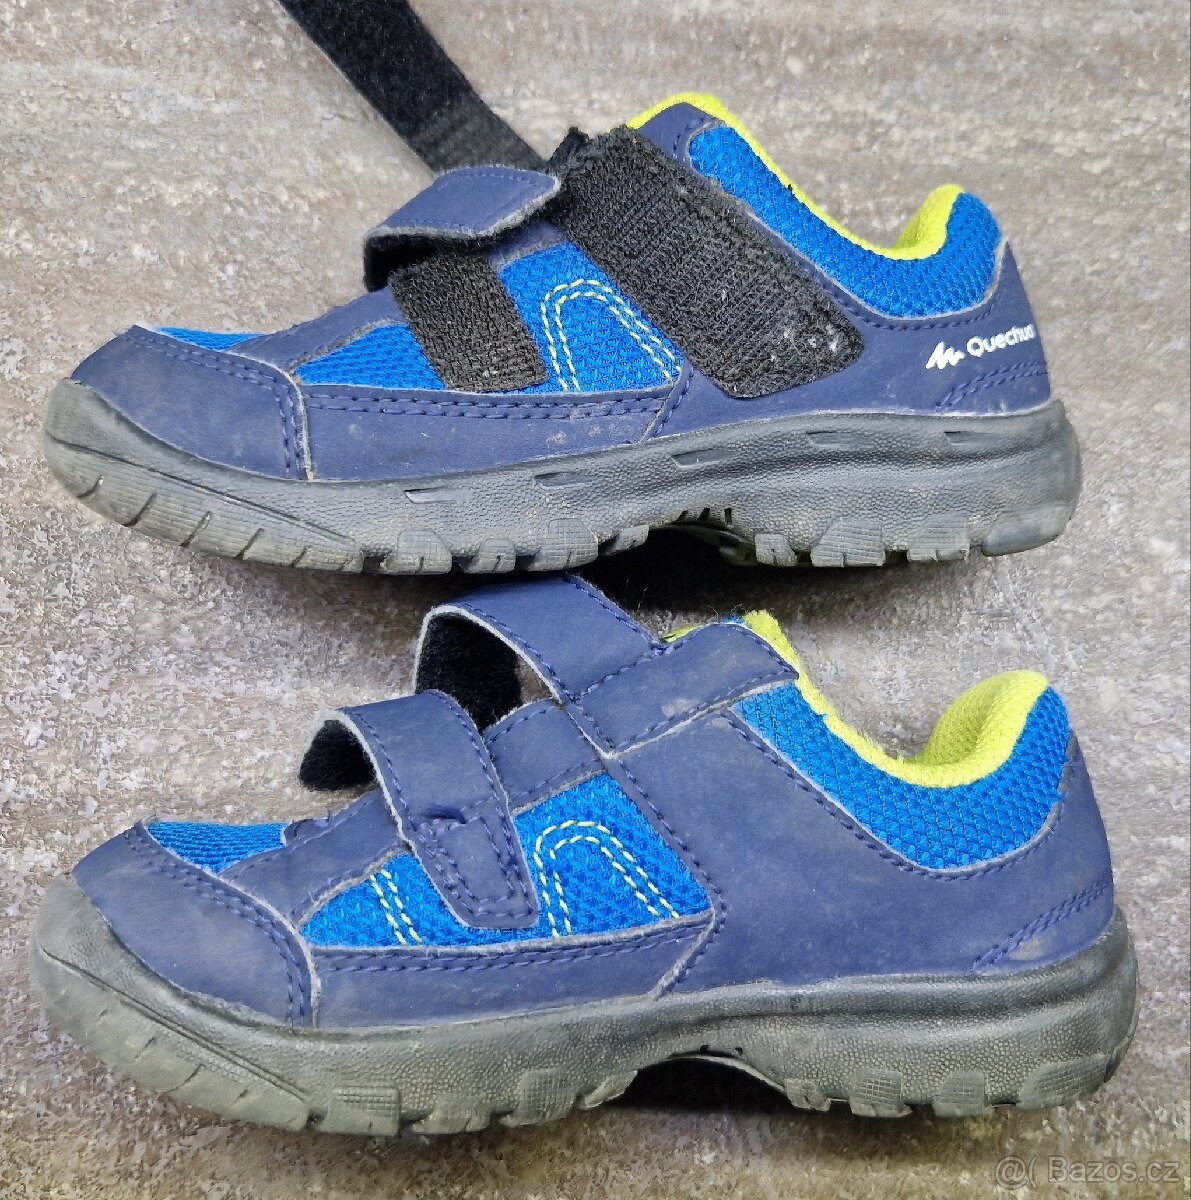 2x Dětské boty Quechua Arpenaz vel. 26 a 27